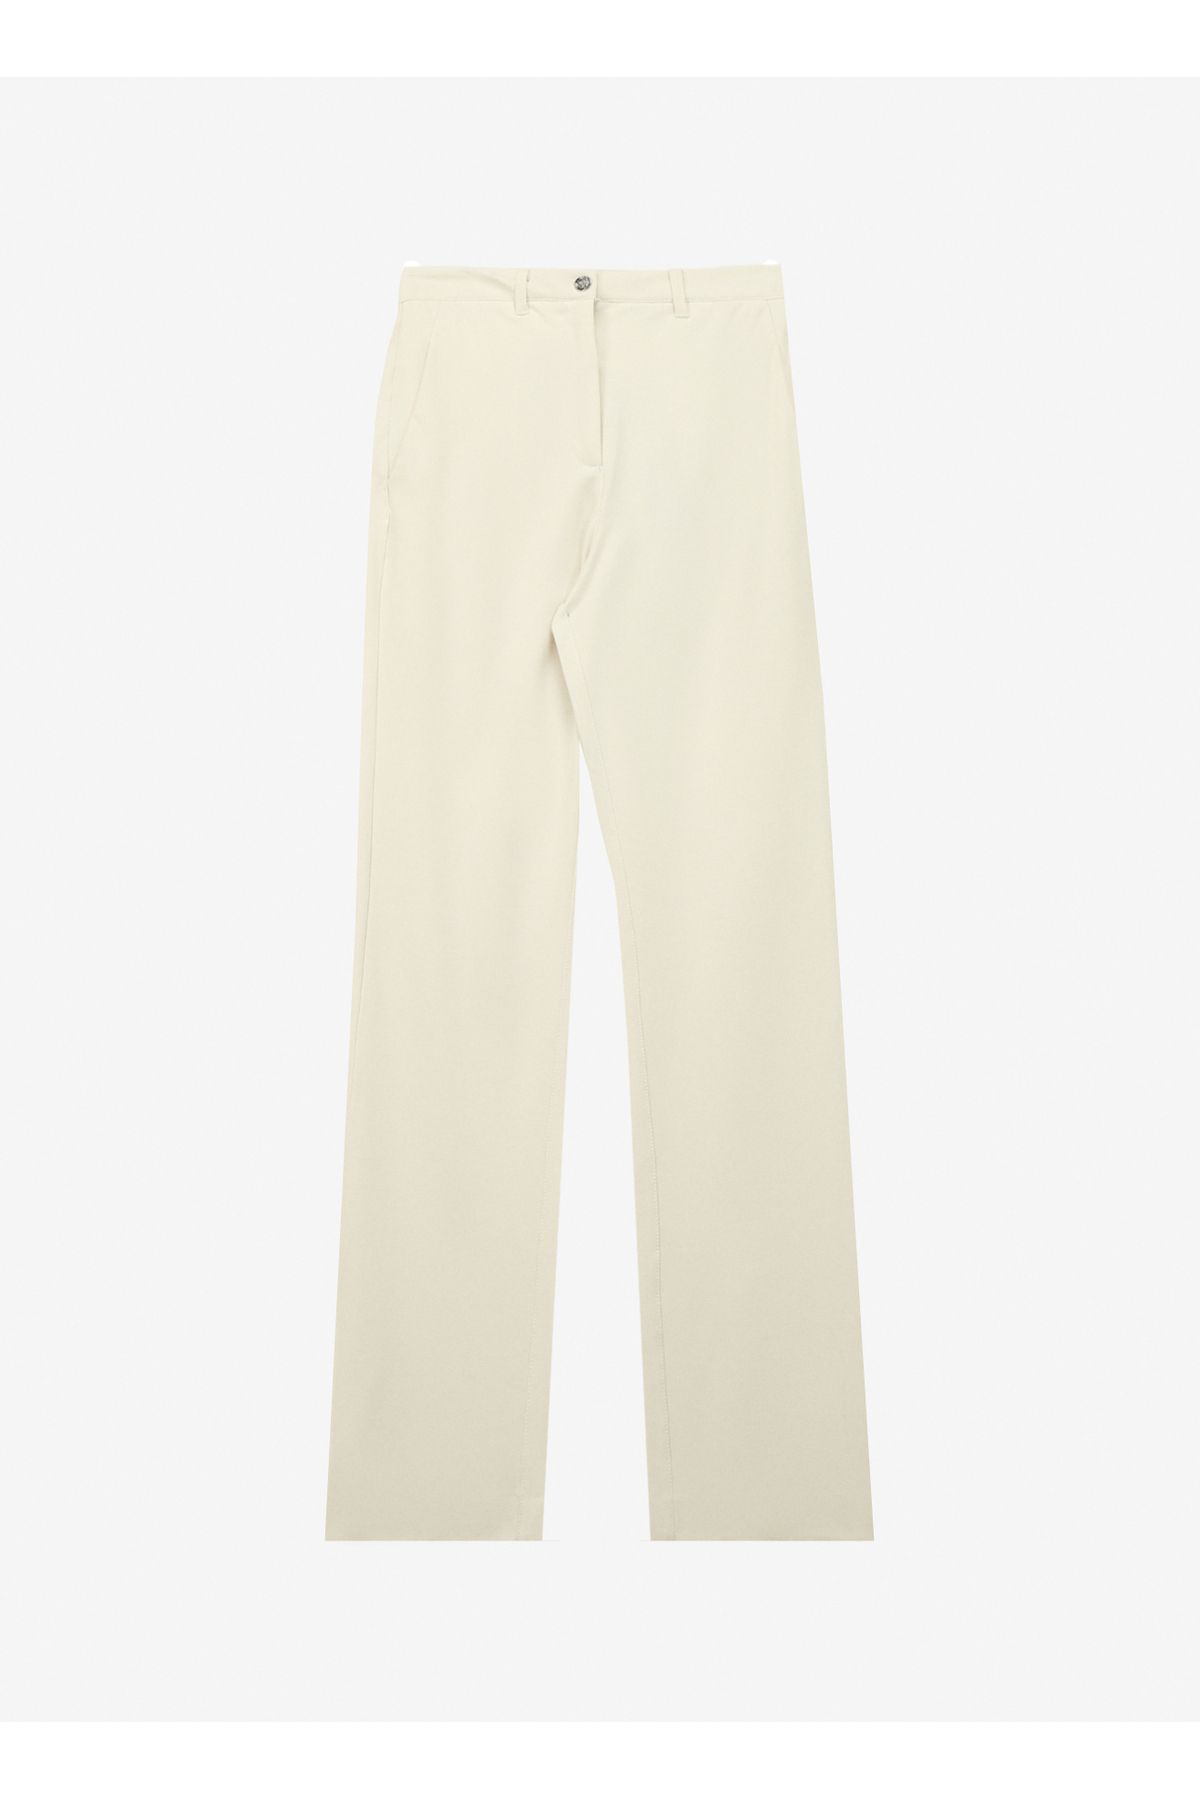 Guess Normal Bel Regular Fit Kırık Beyaz Kadın Pantolon W4RB50KBJP2-G012